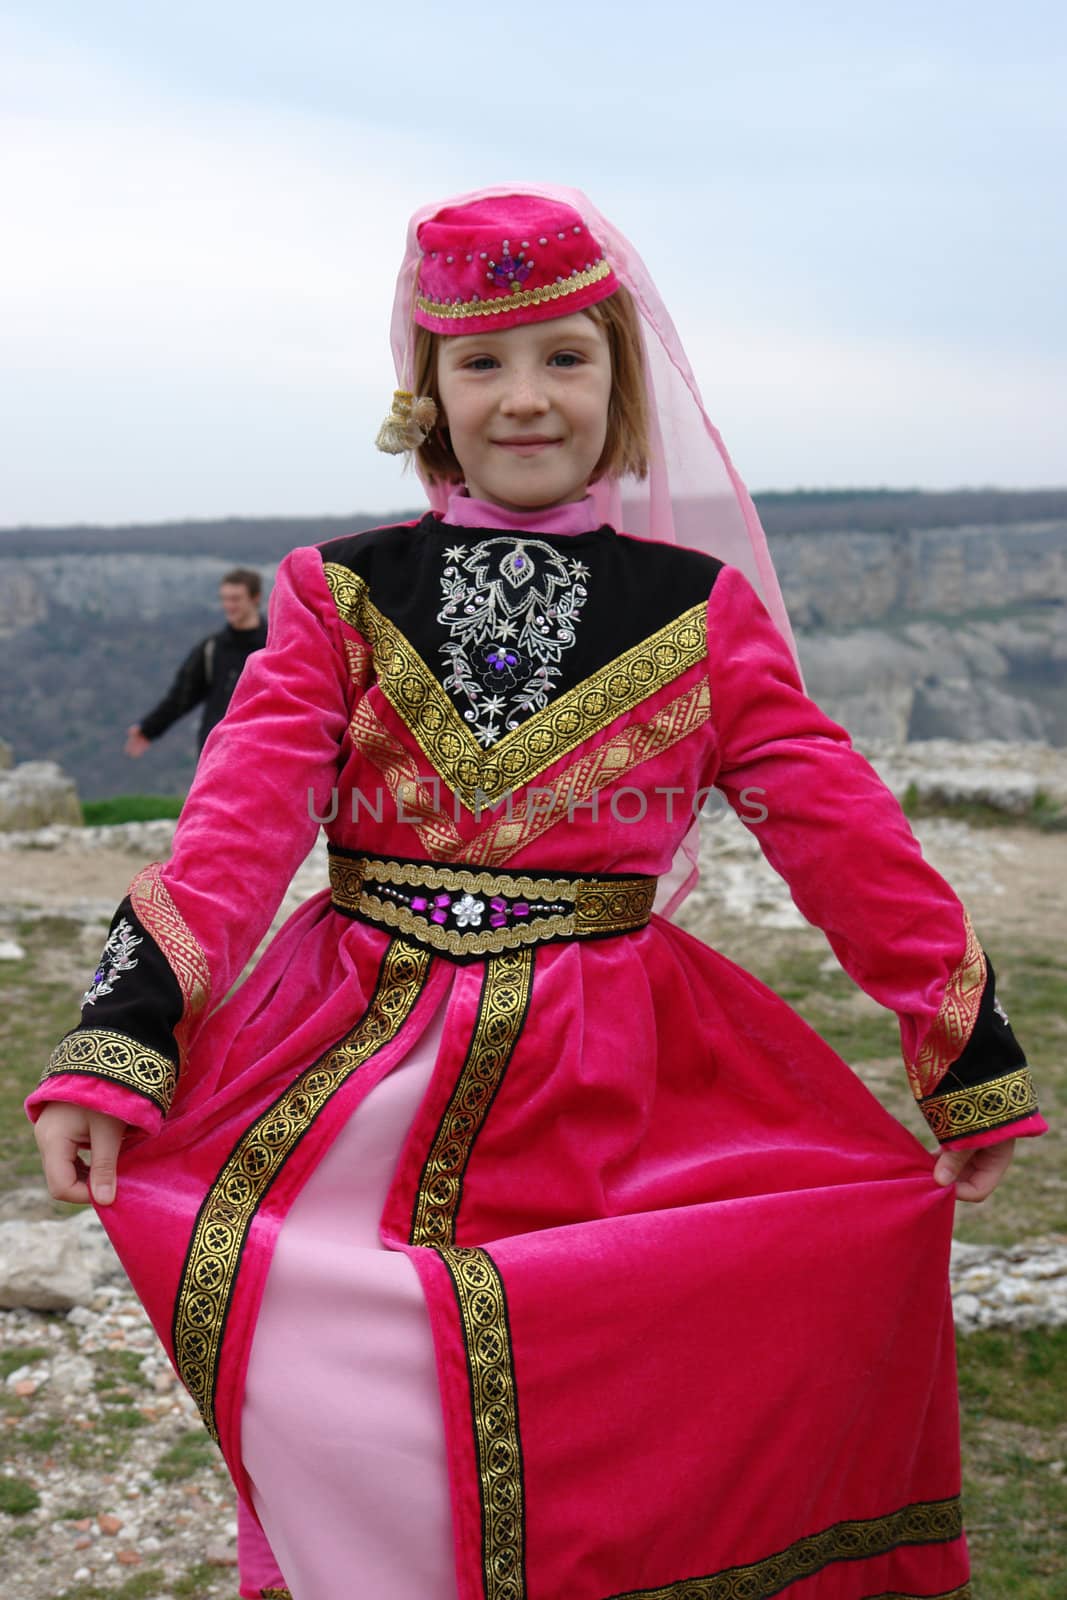 The girl in the Tatar dress